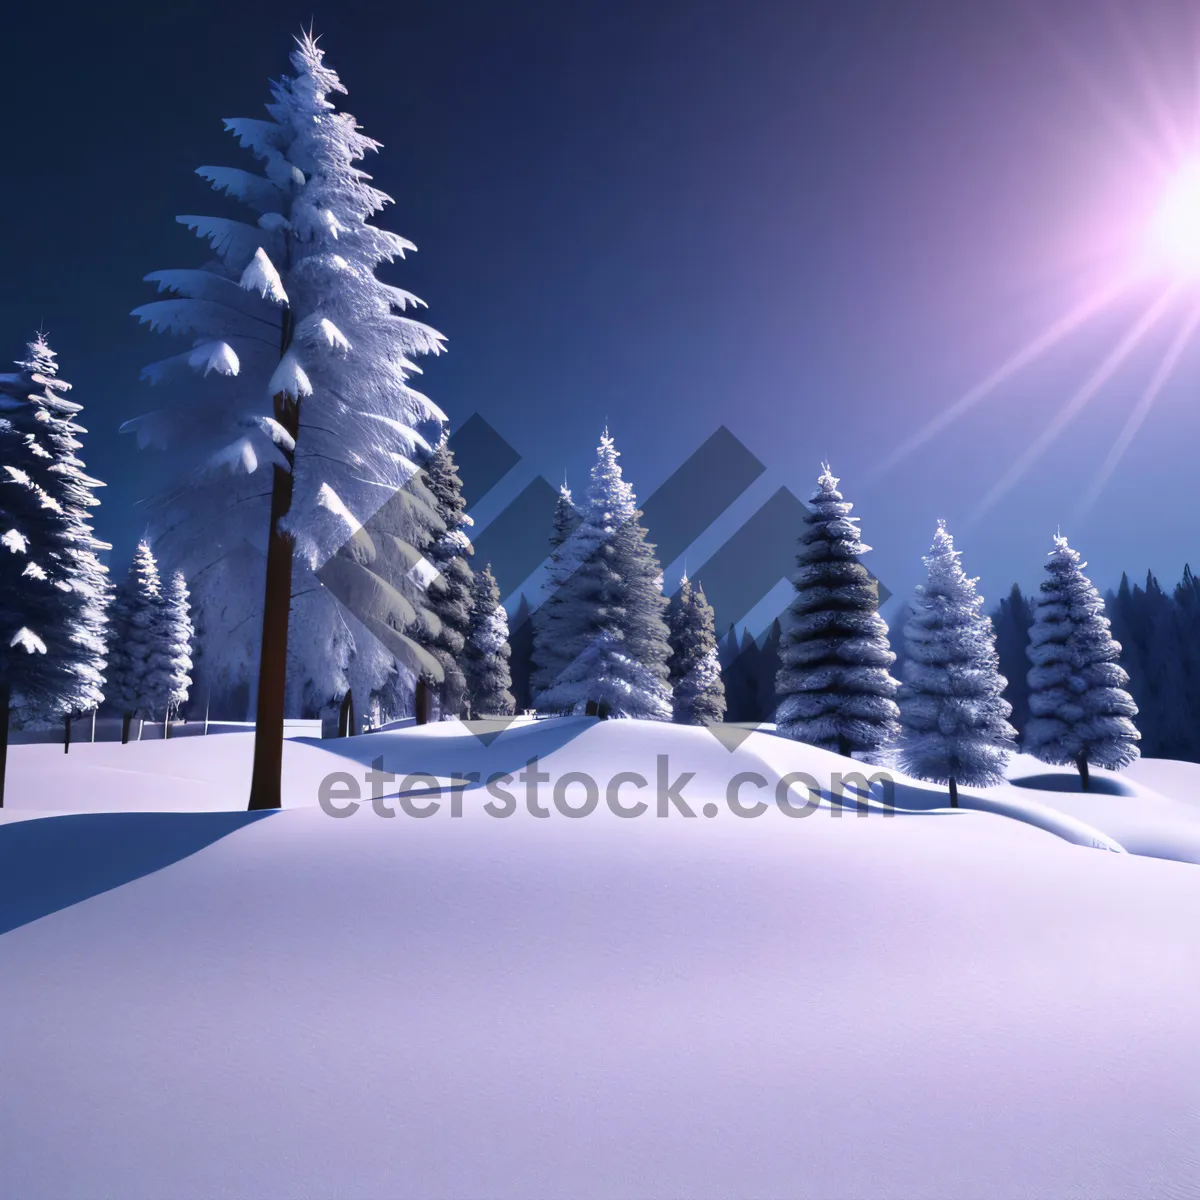 Picture of Winter Wonderland: Majestic Evergreen Tree in Snowy Landscape